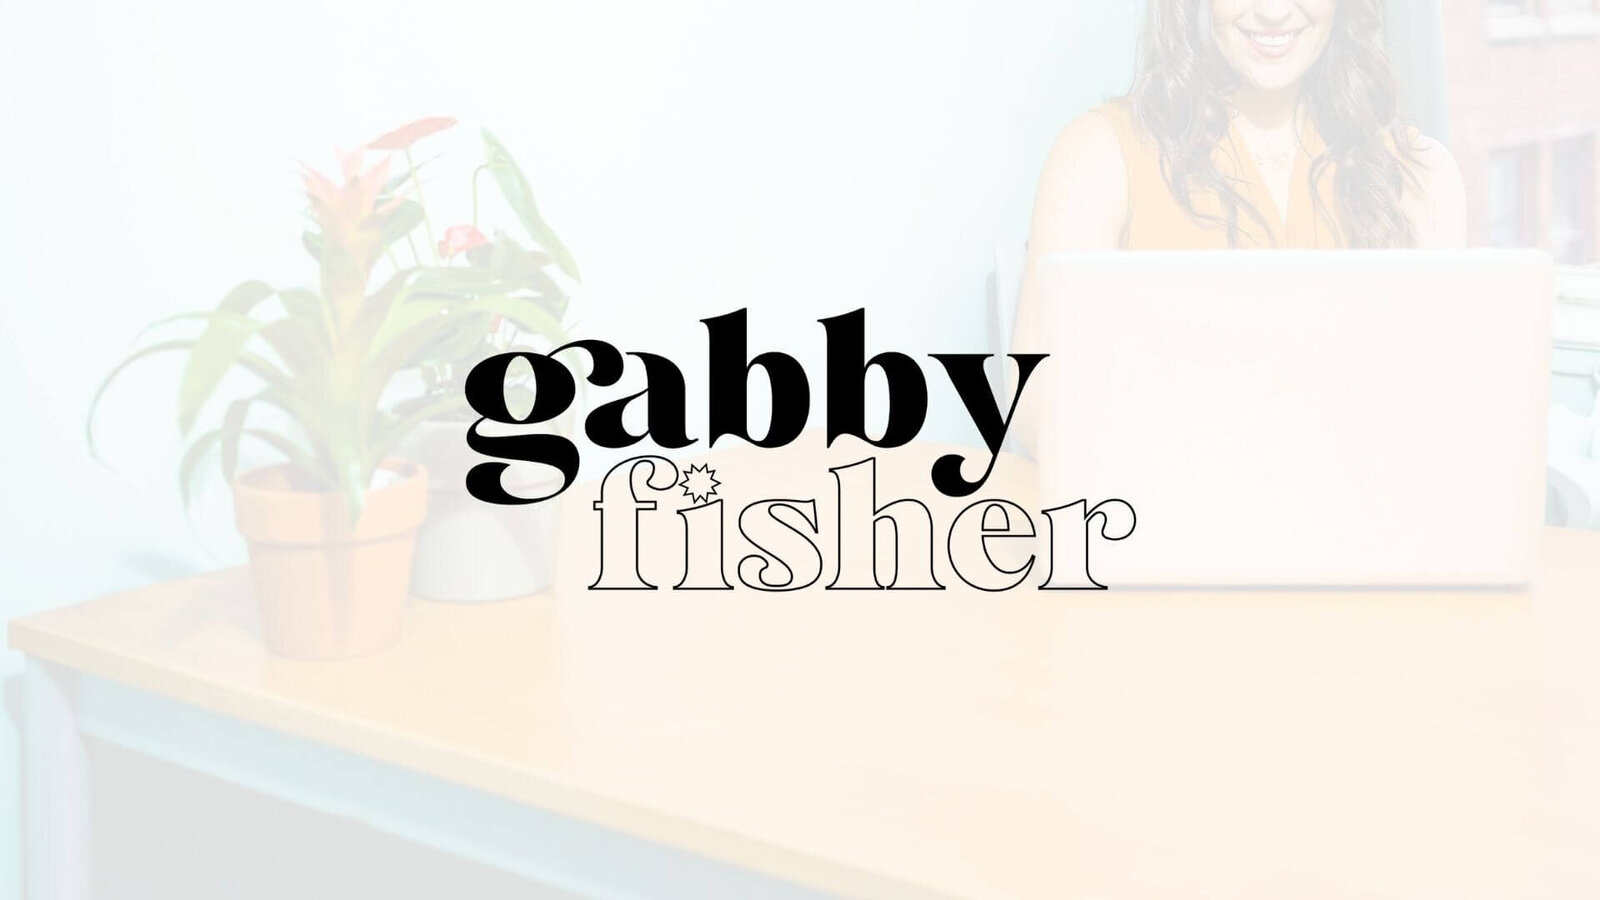 gabby fisher website graphics01